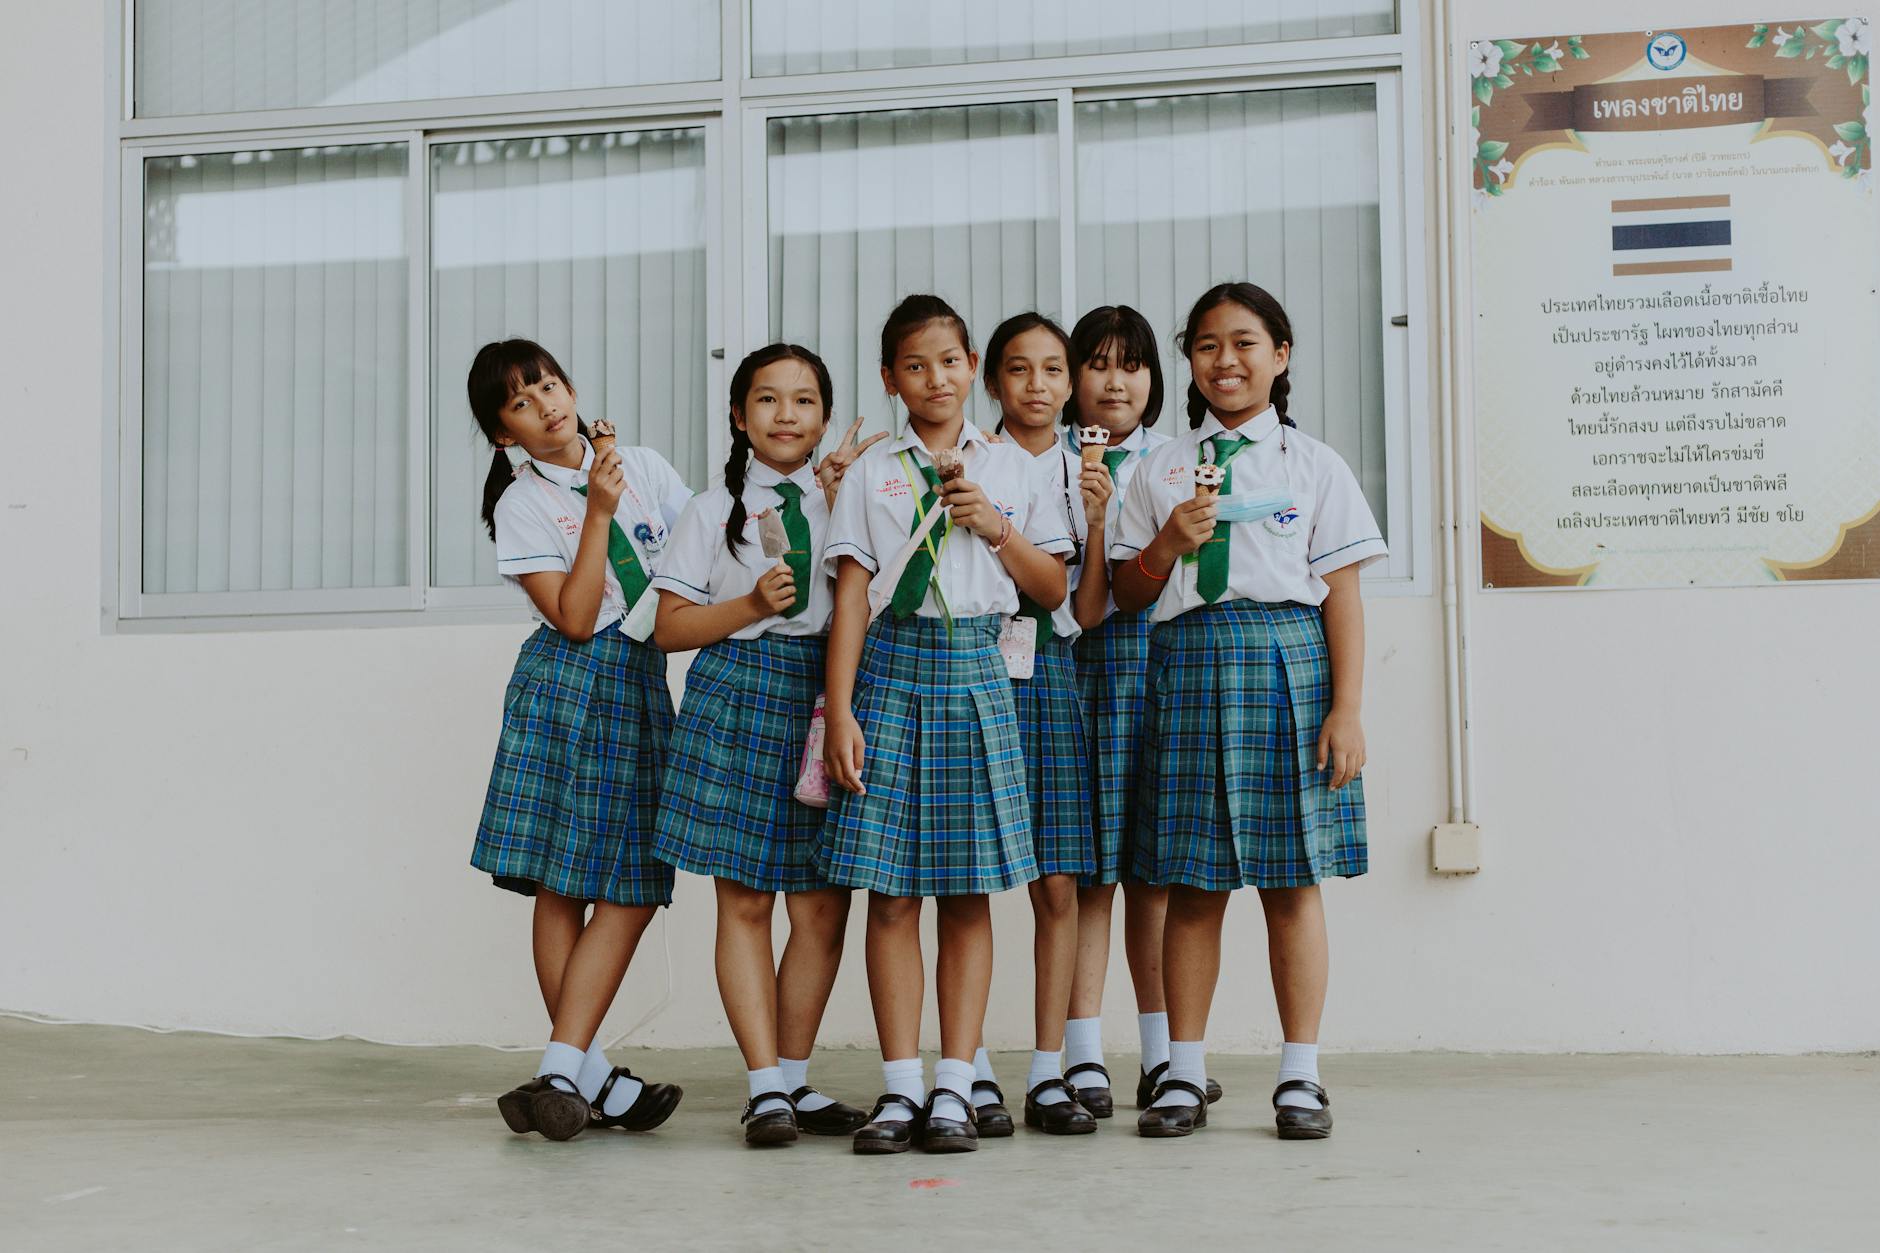 portrait of girls in school uniforms with ice cream